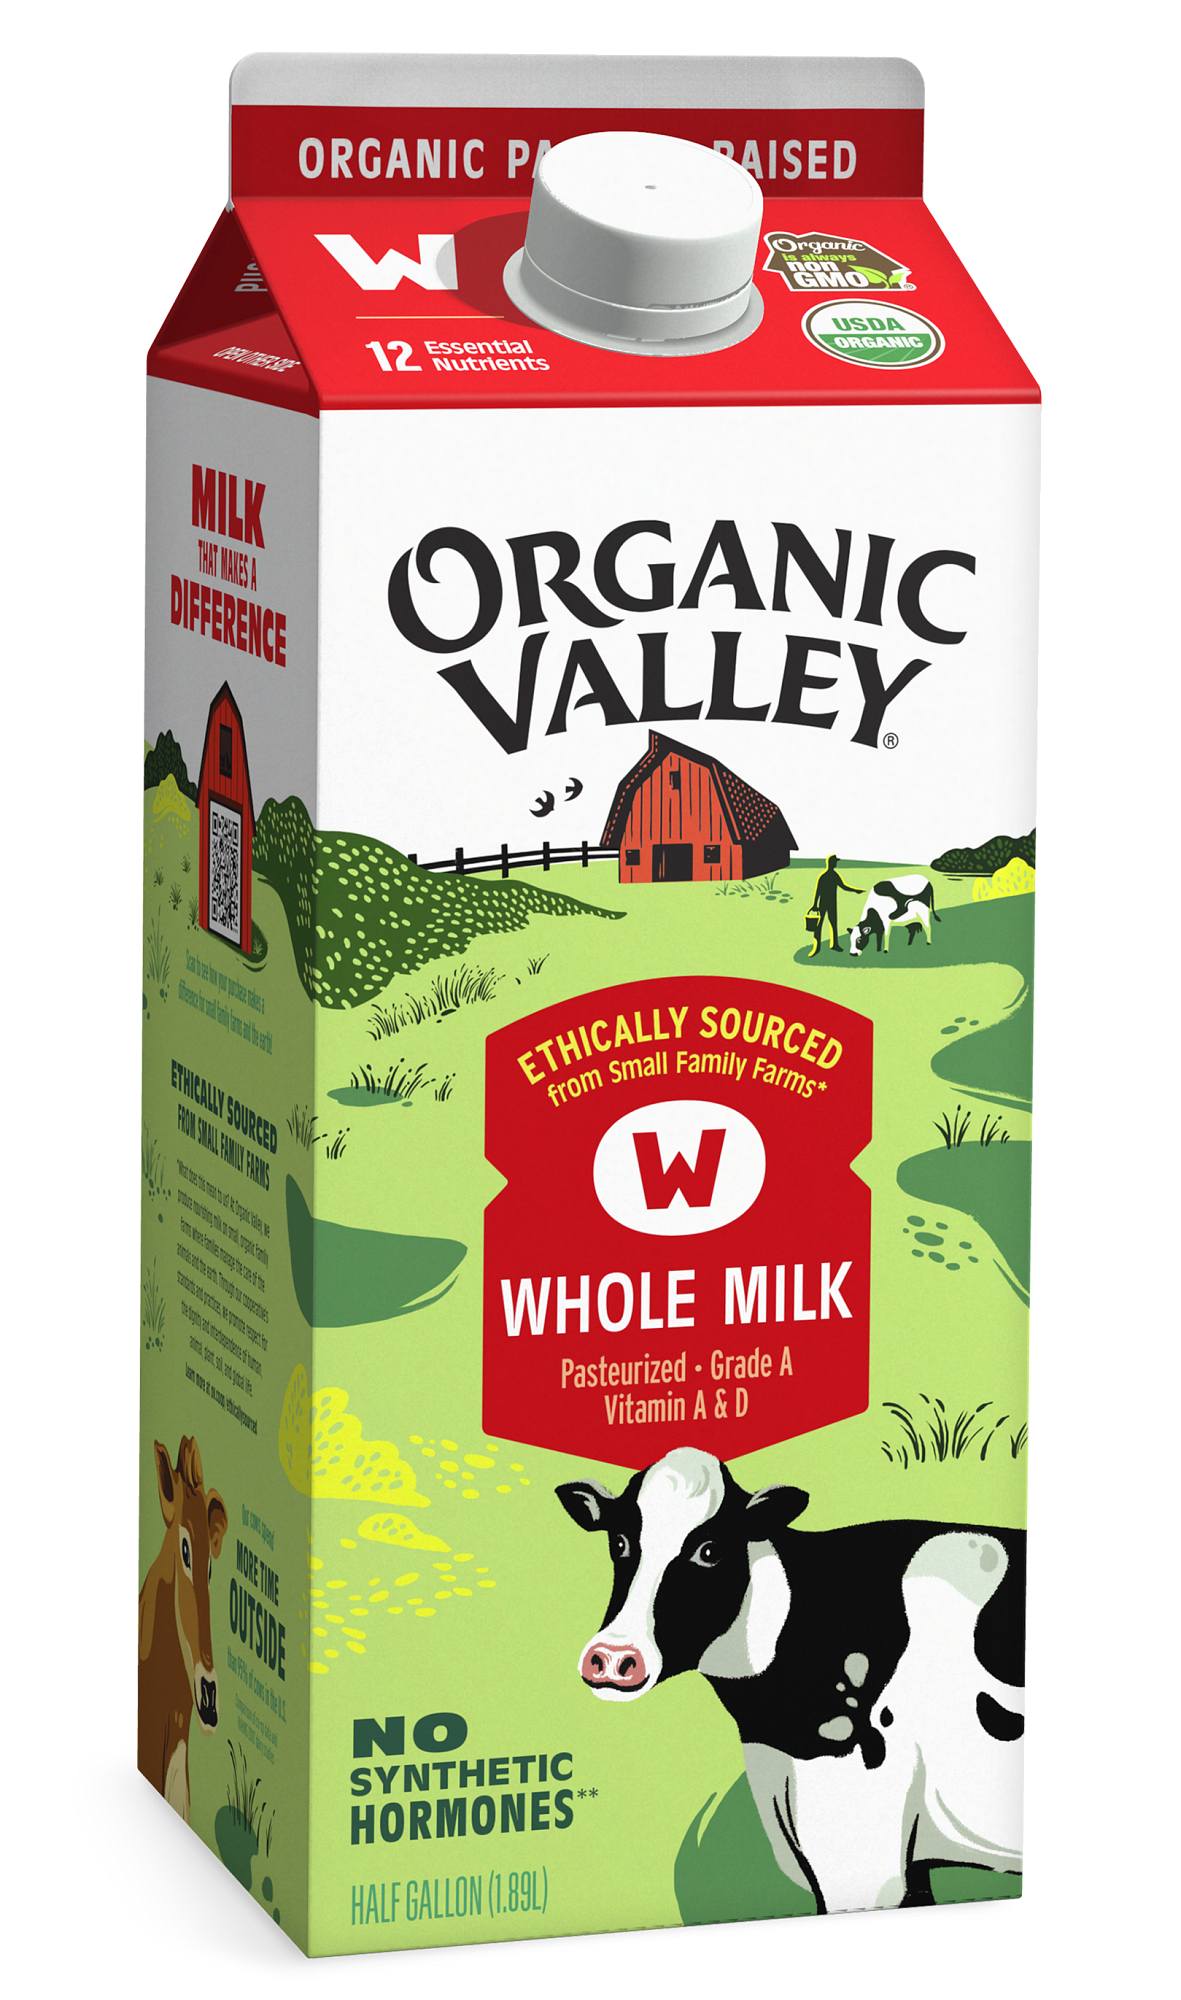 Half & Half  Organic Valley